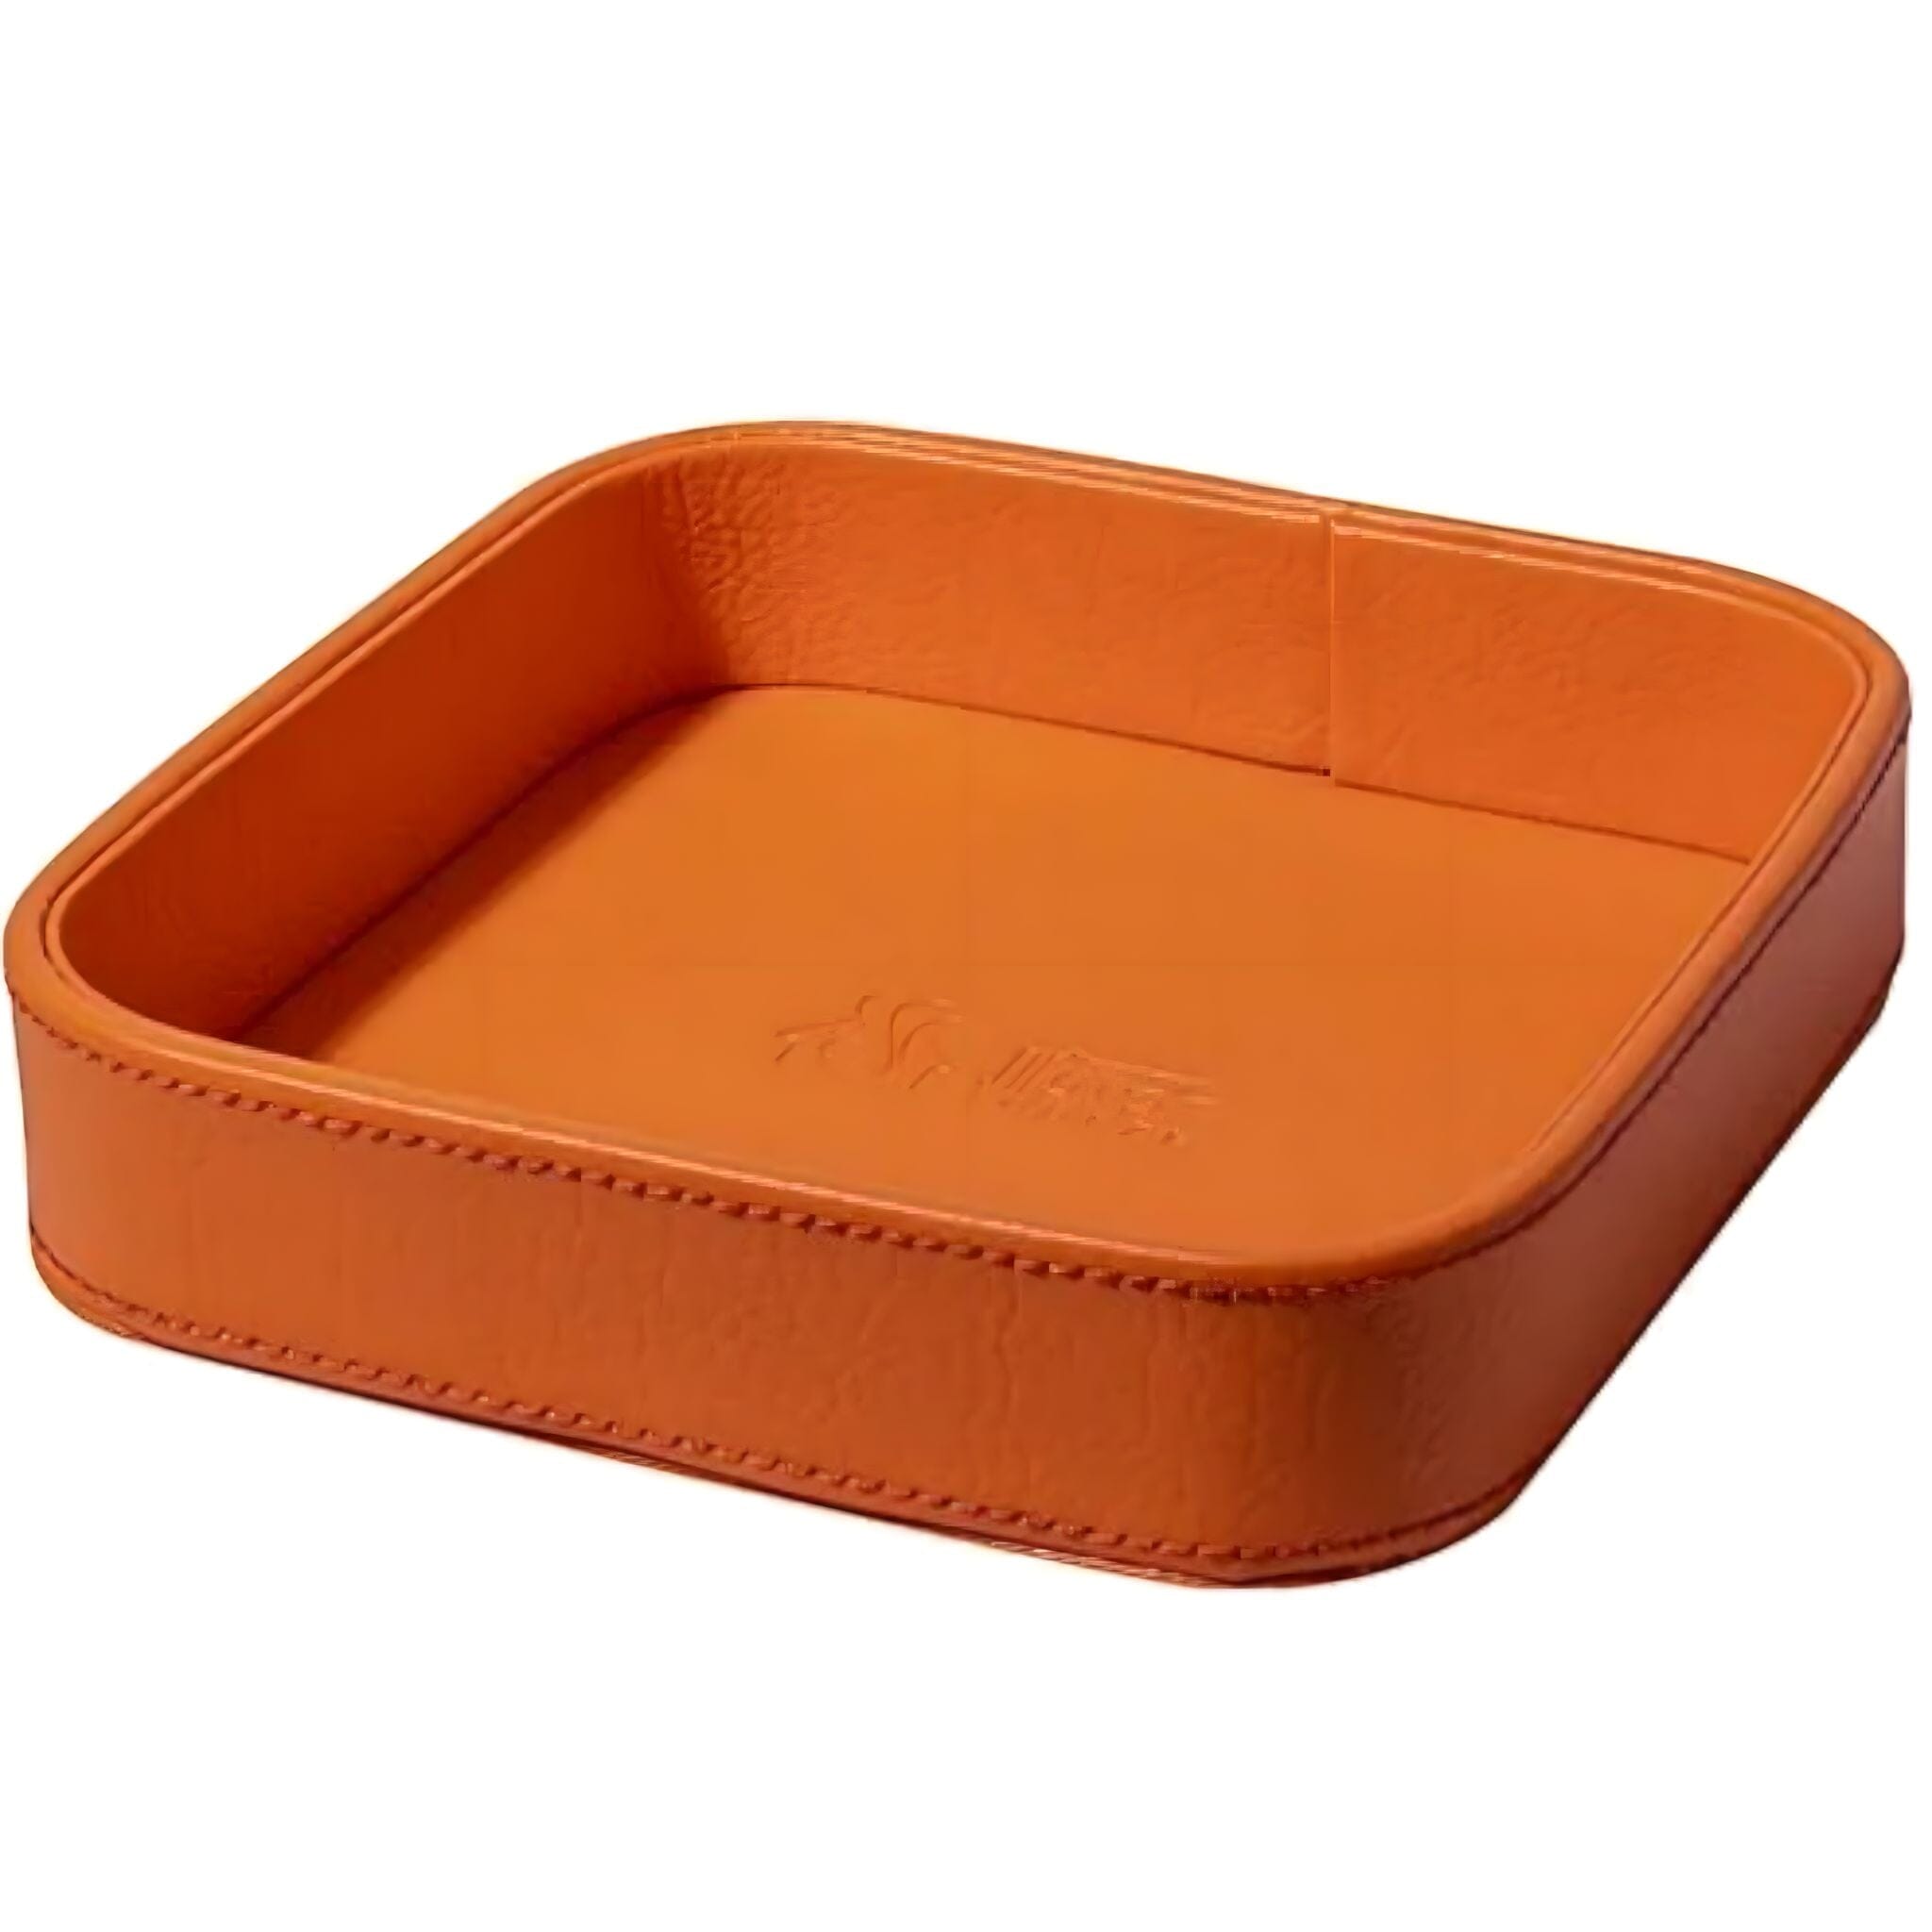 Leather Luxe Organiser Decorative Trays Orange 